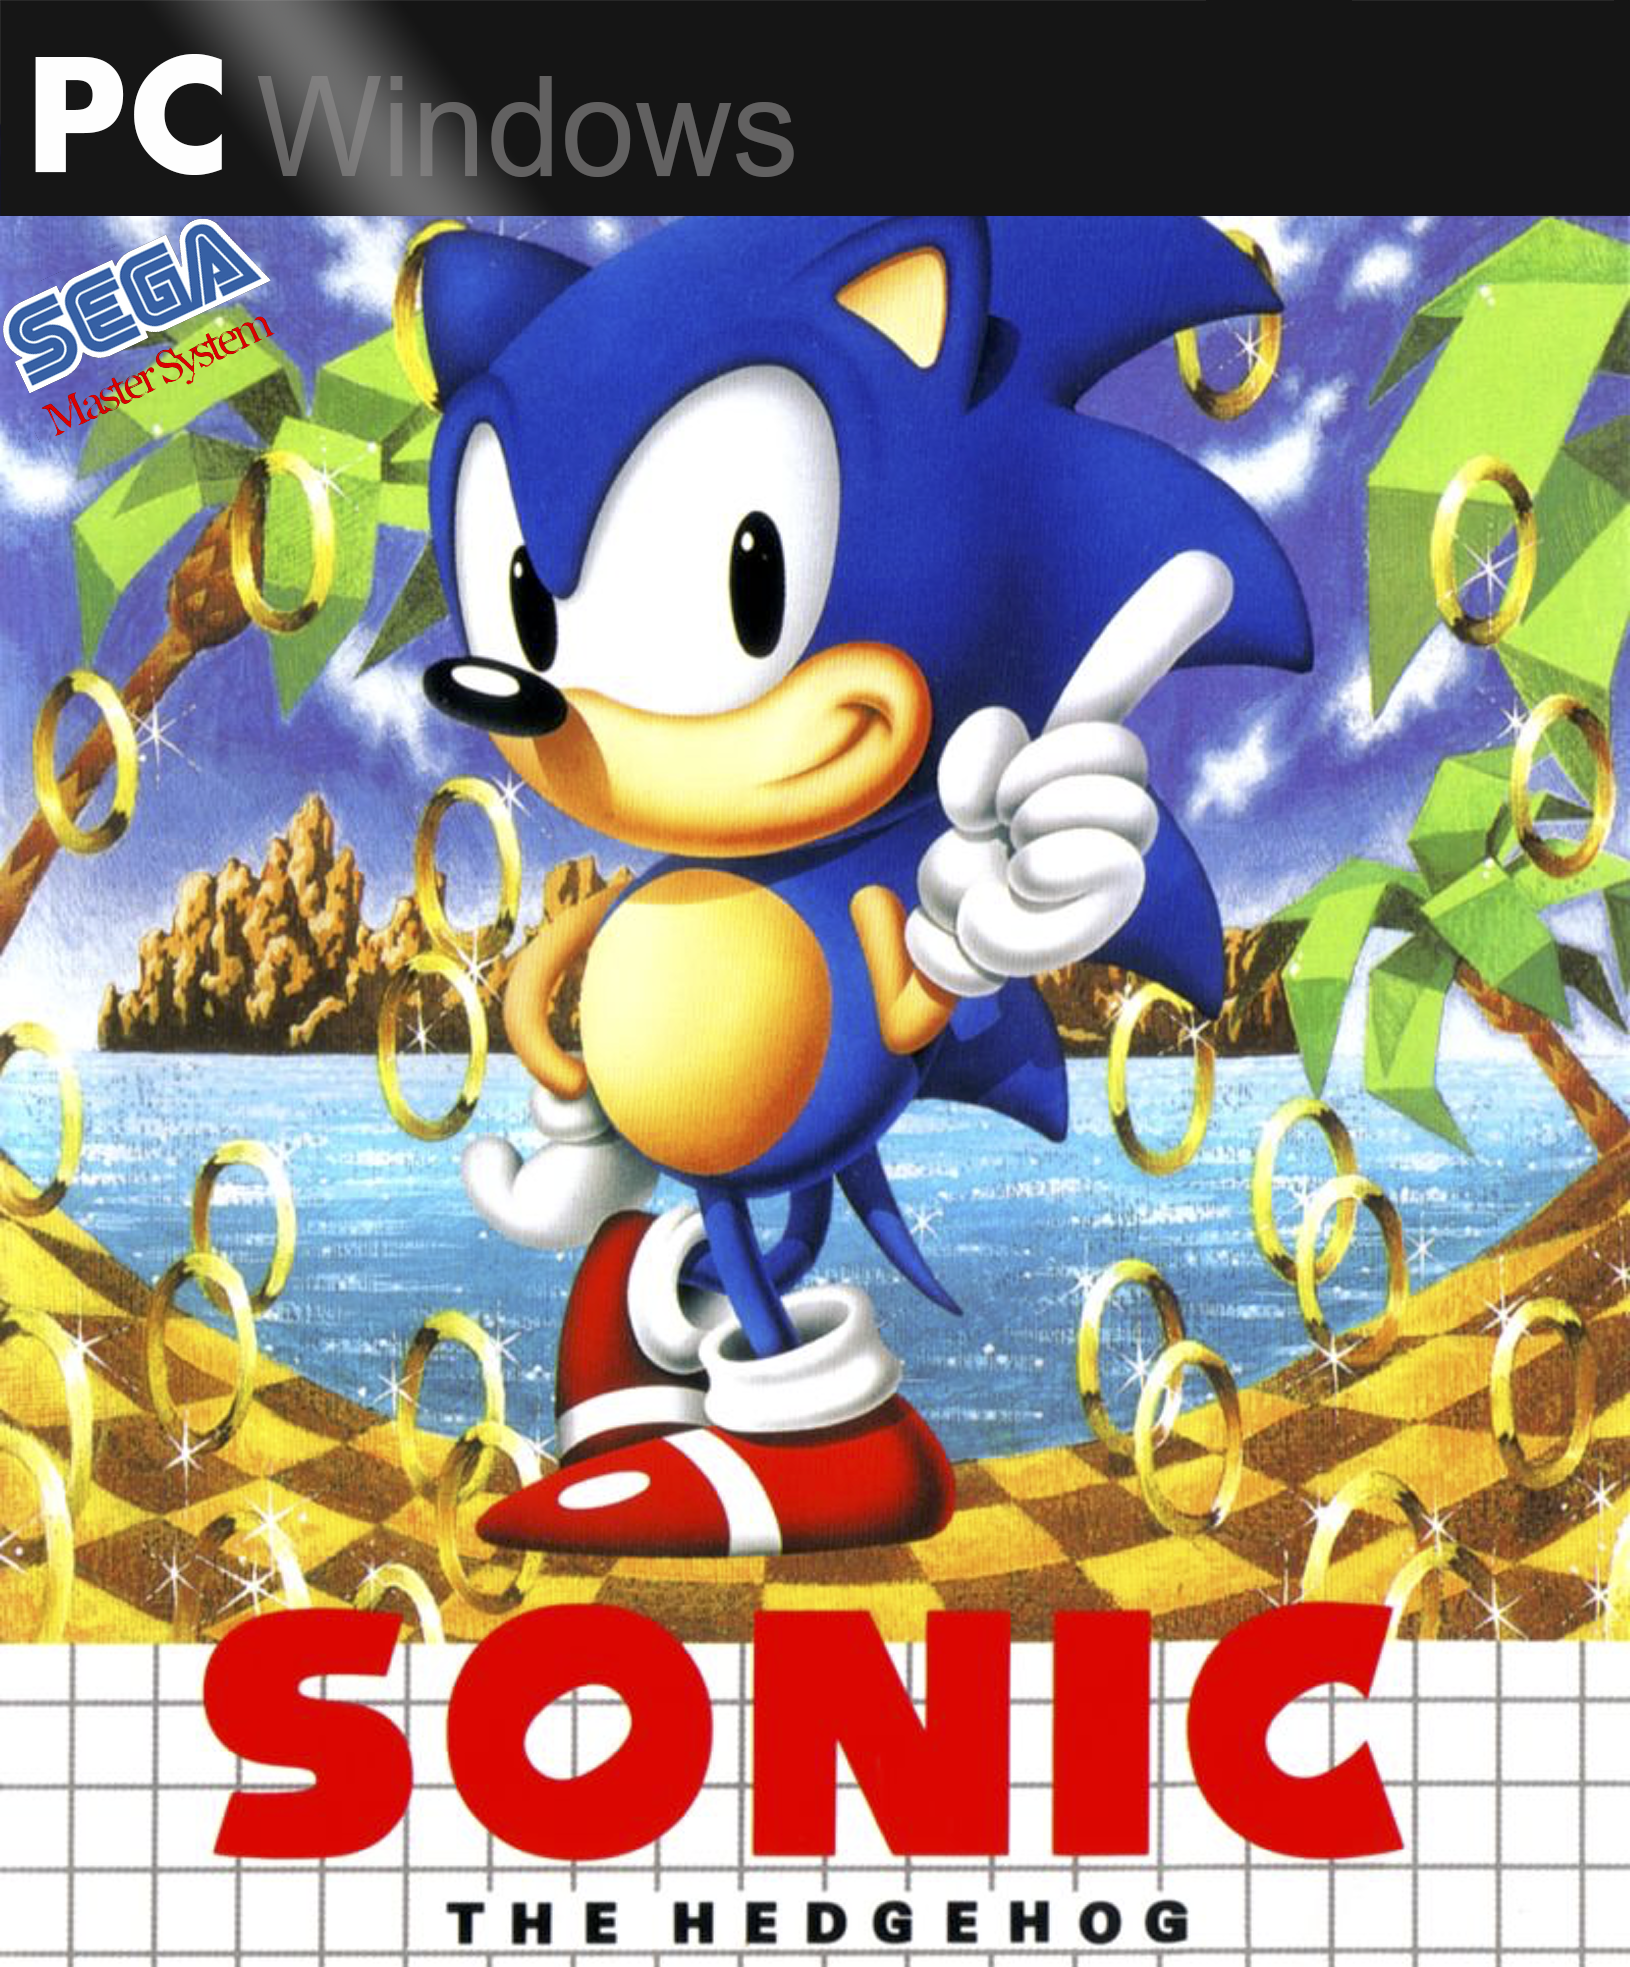 Sonic SMS Remake